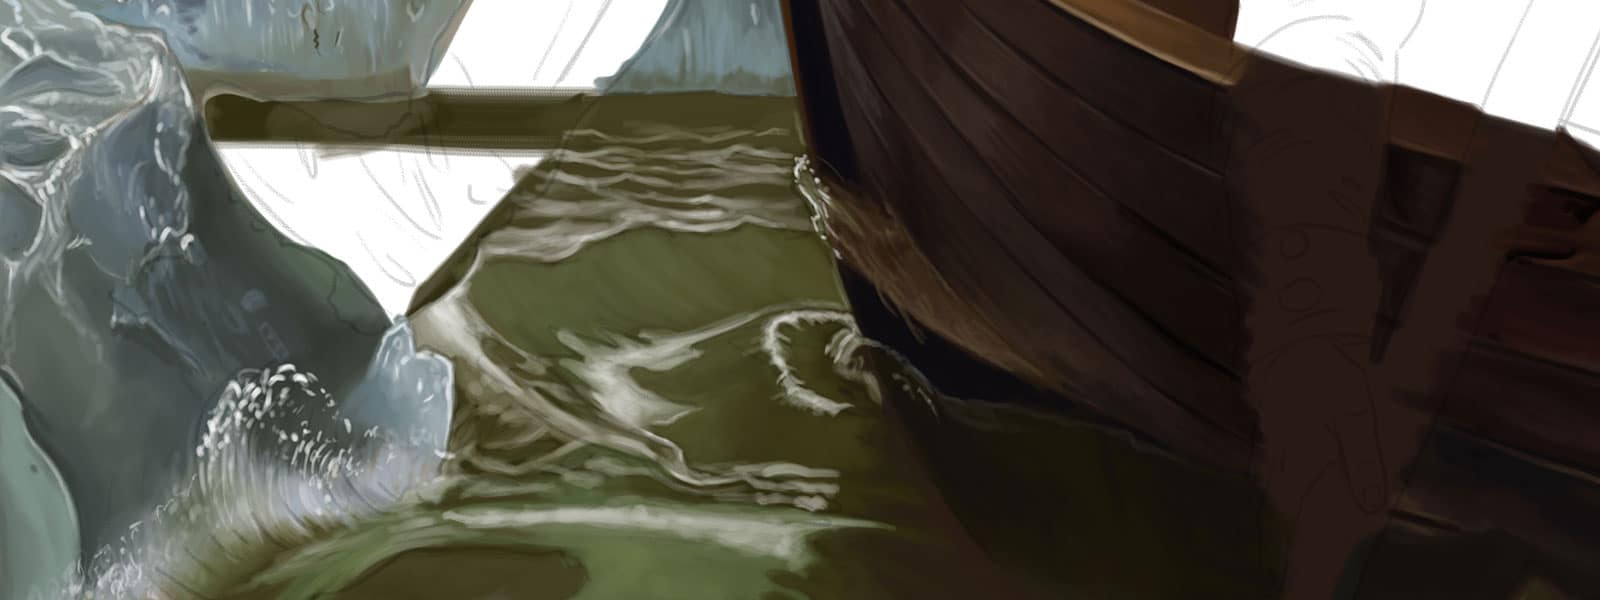 Boat Detail